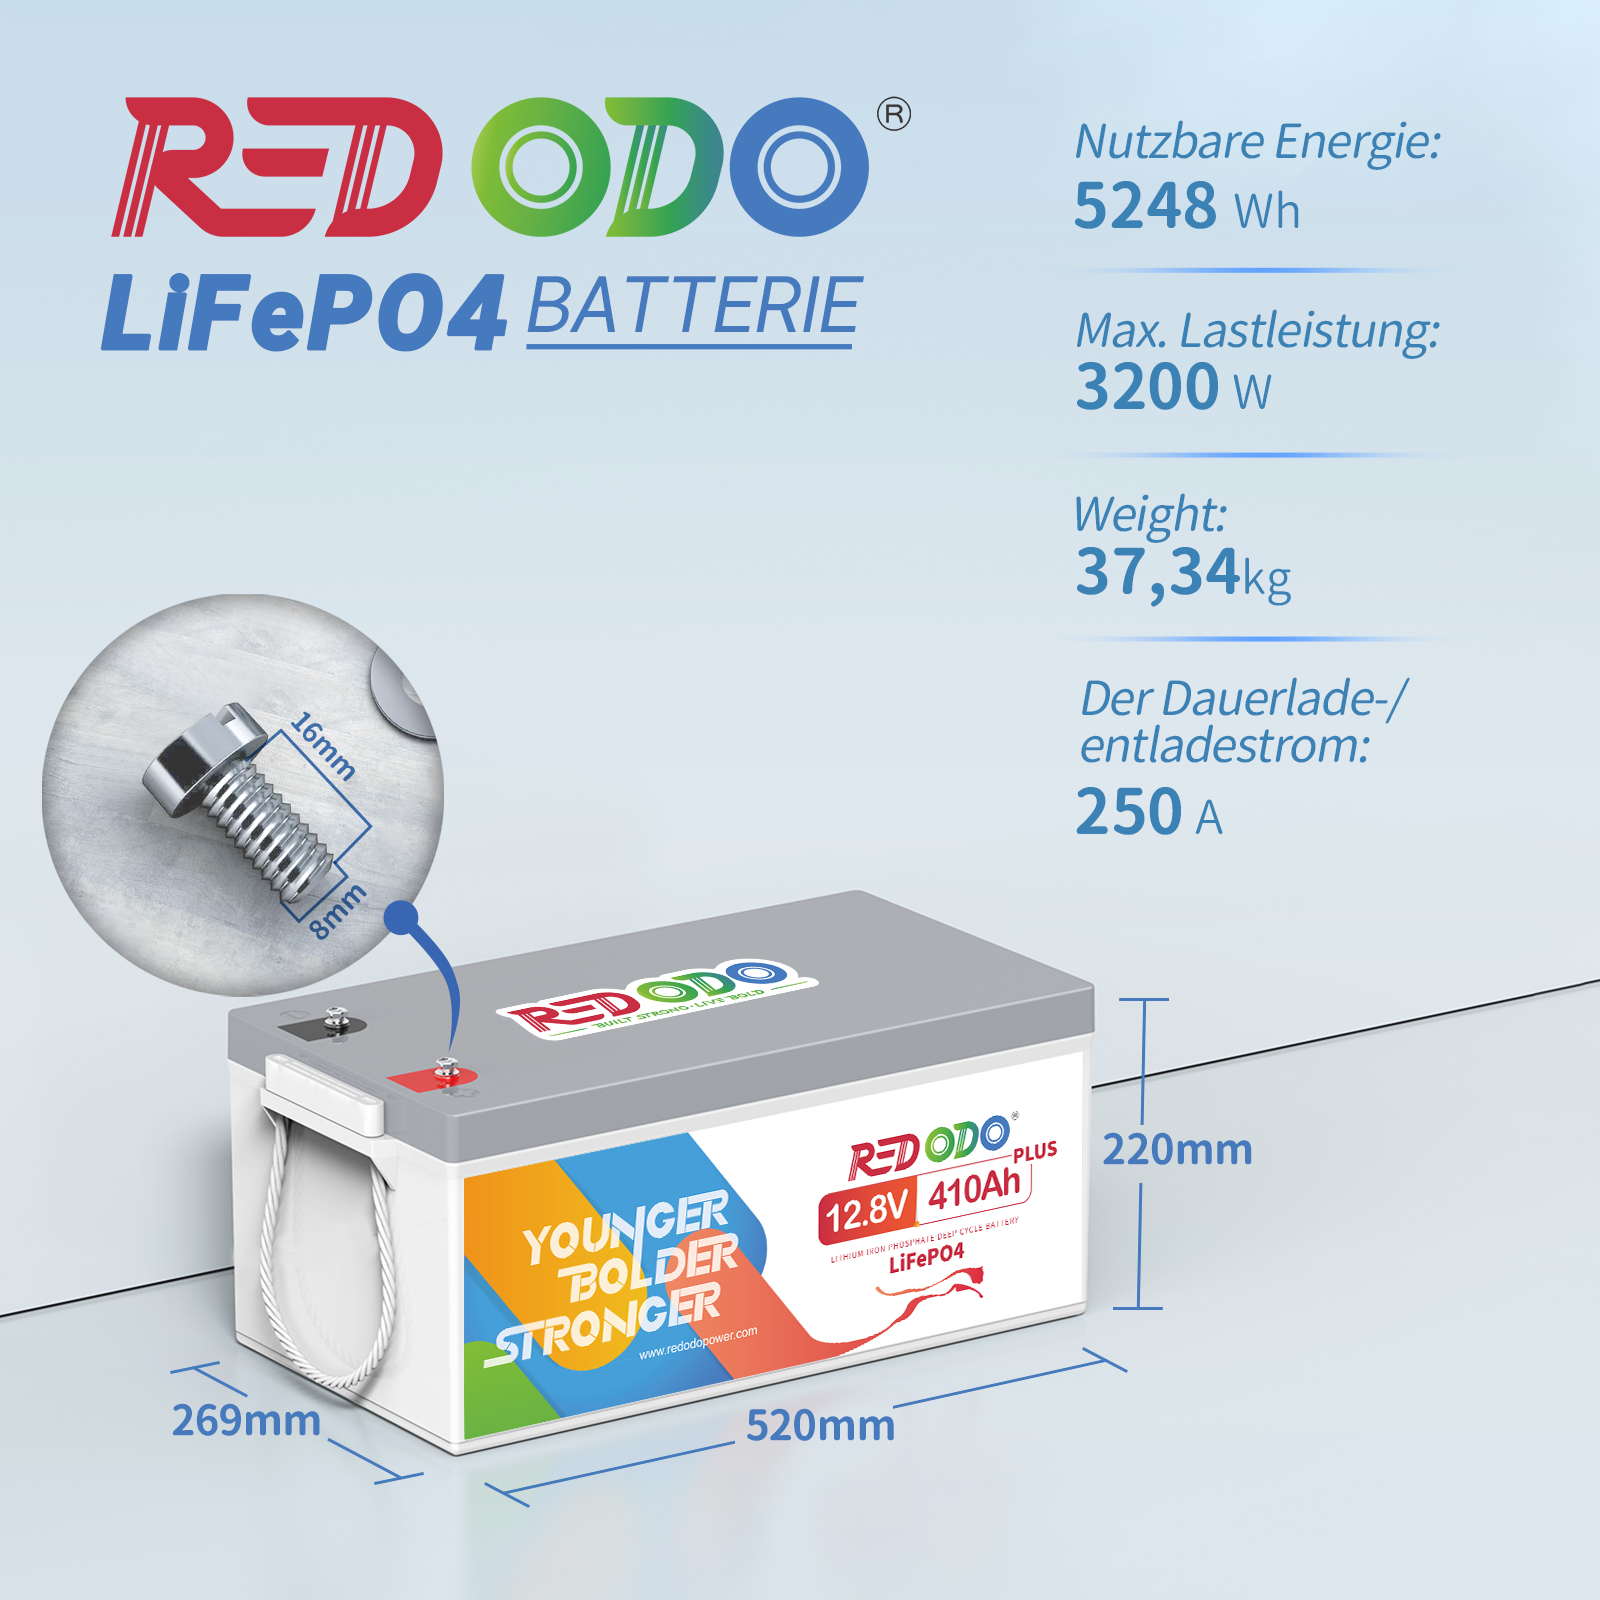 Redodo-LiFePo4-Ladegeraet-Vergleich-Wirkungsgrad 